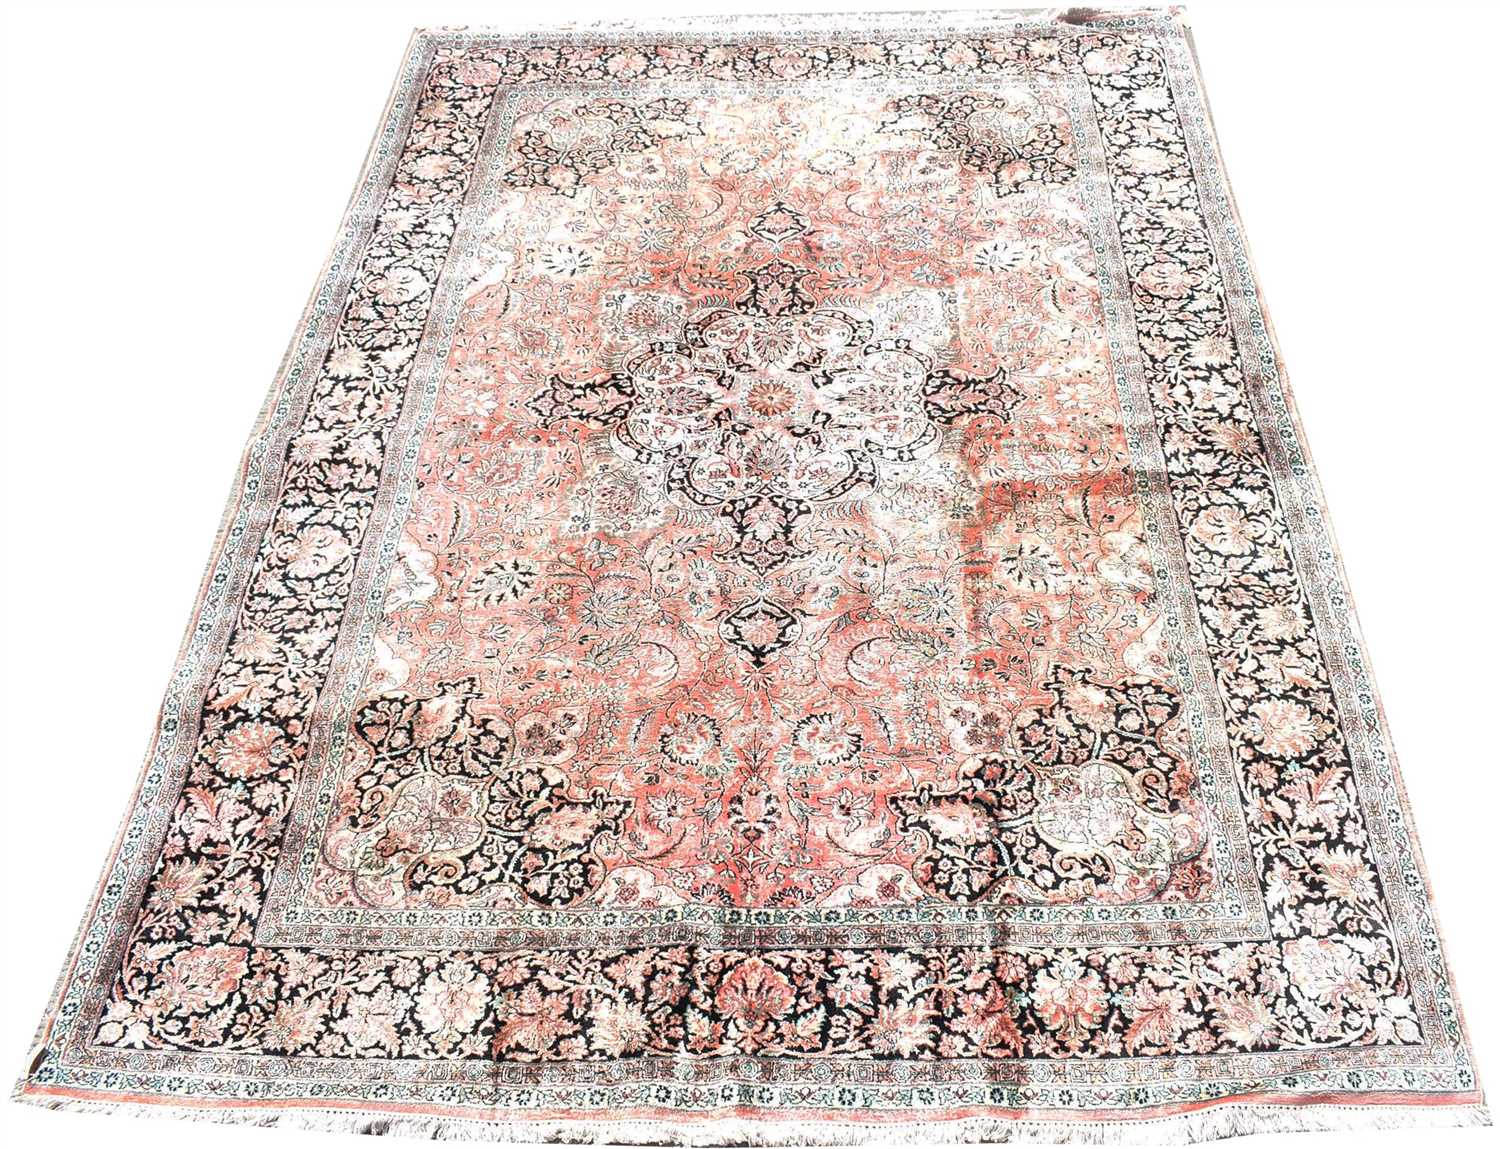 Lot 685 - Silk carpet